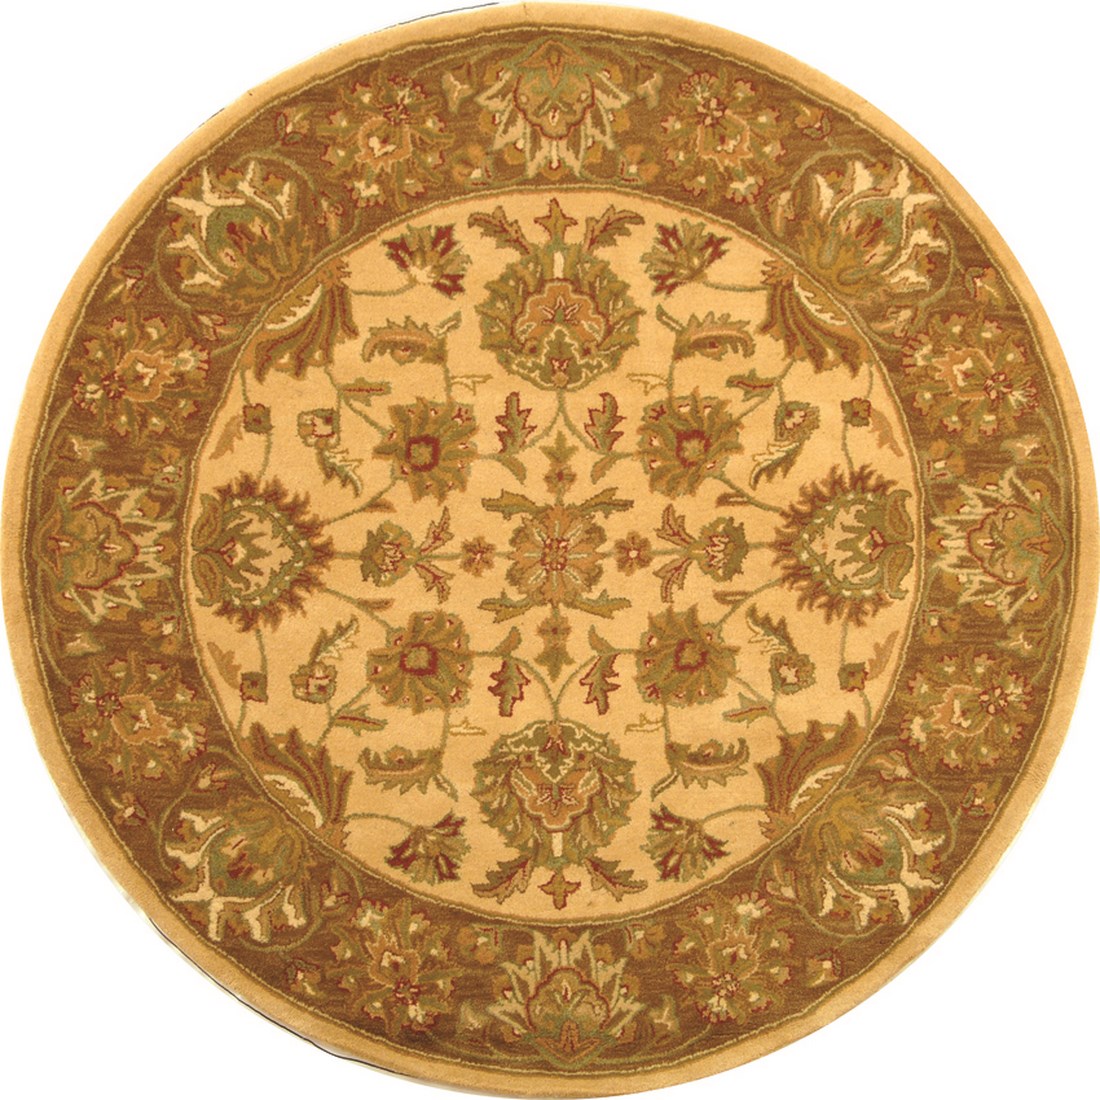 SAFAVIEH Heritage Regis Traditional Wool Area Rug, Ivory/Brown, 3'6" x 3'6" Round - image 1 of 9